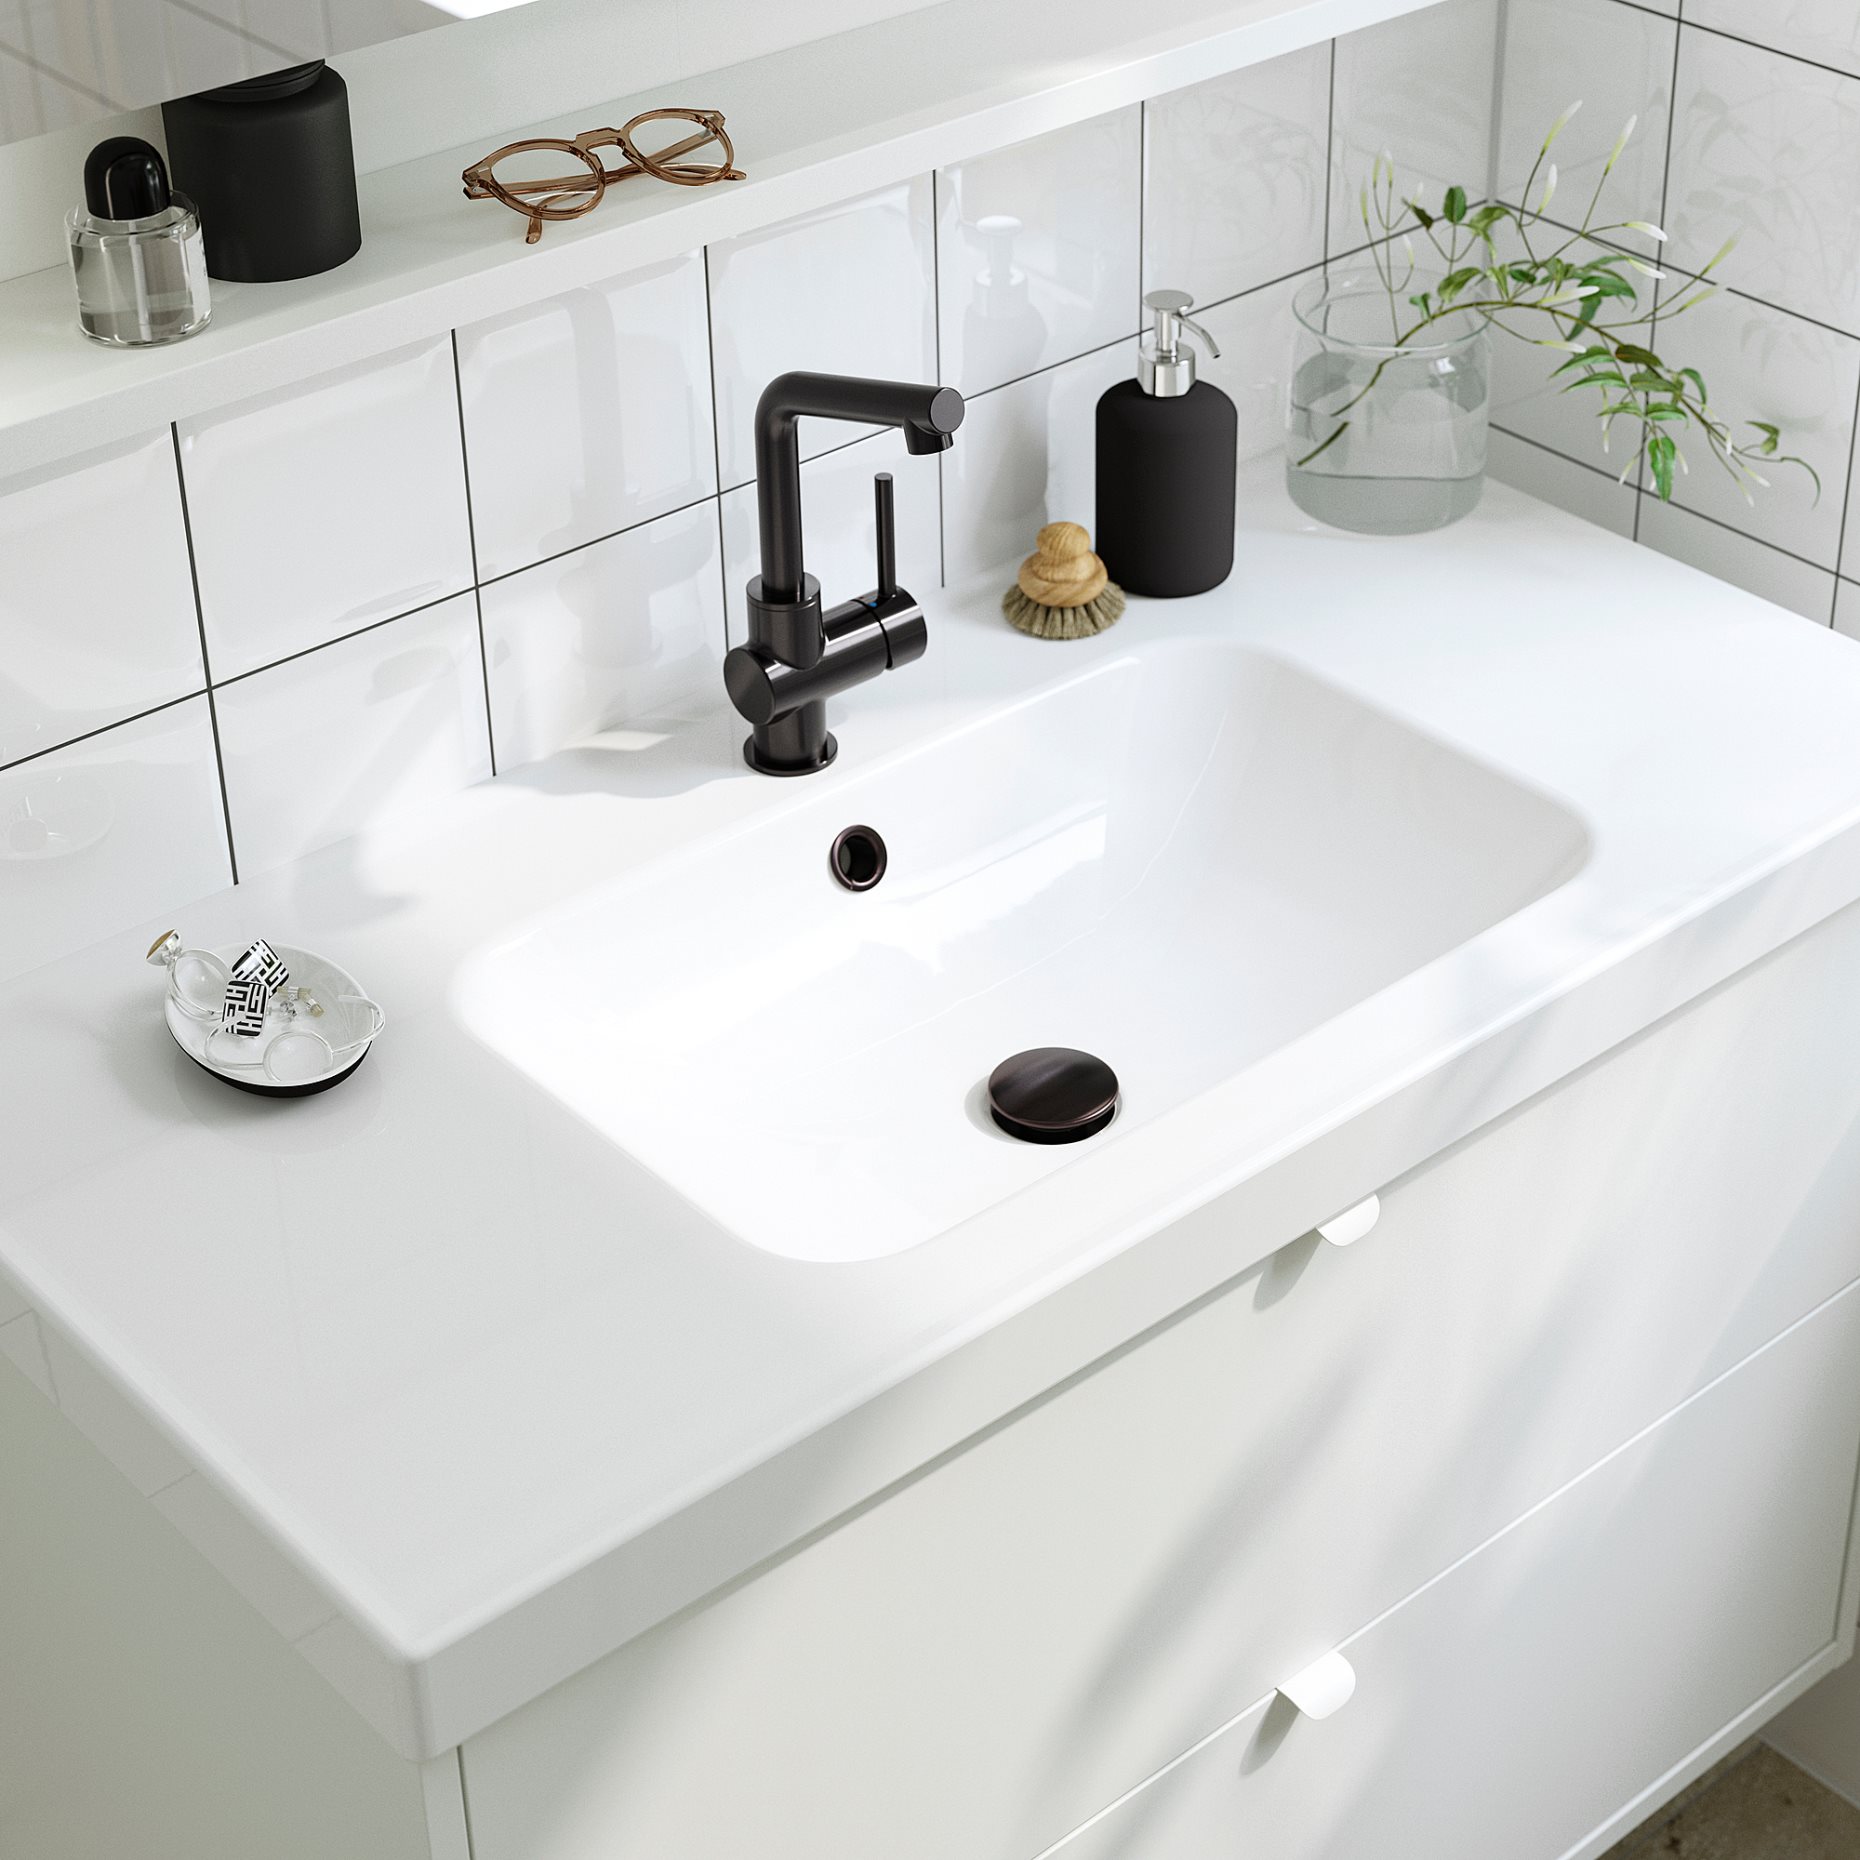 HAVBACK/ORRSJON, wash-stand with drawers/wash-basin/tap, 102x49x69 cm, 295.213.25